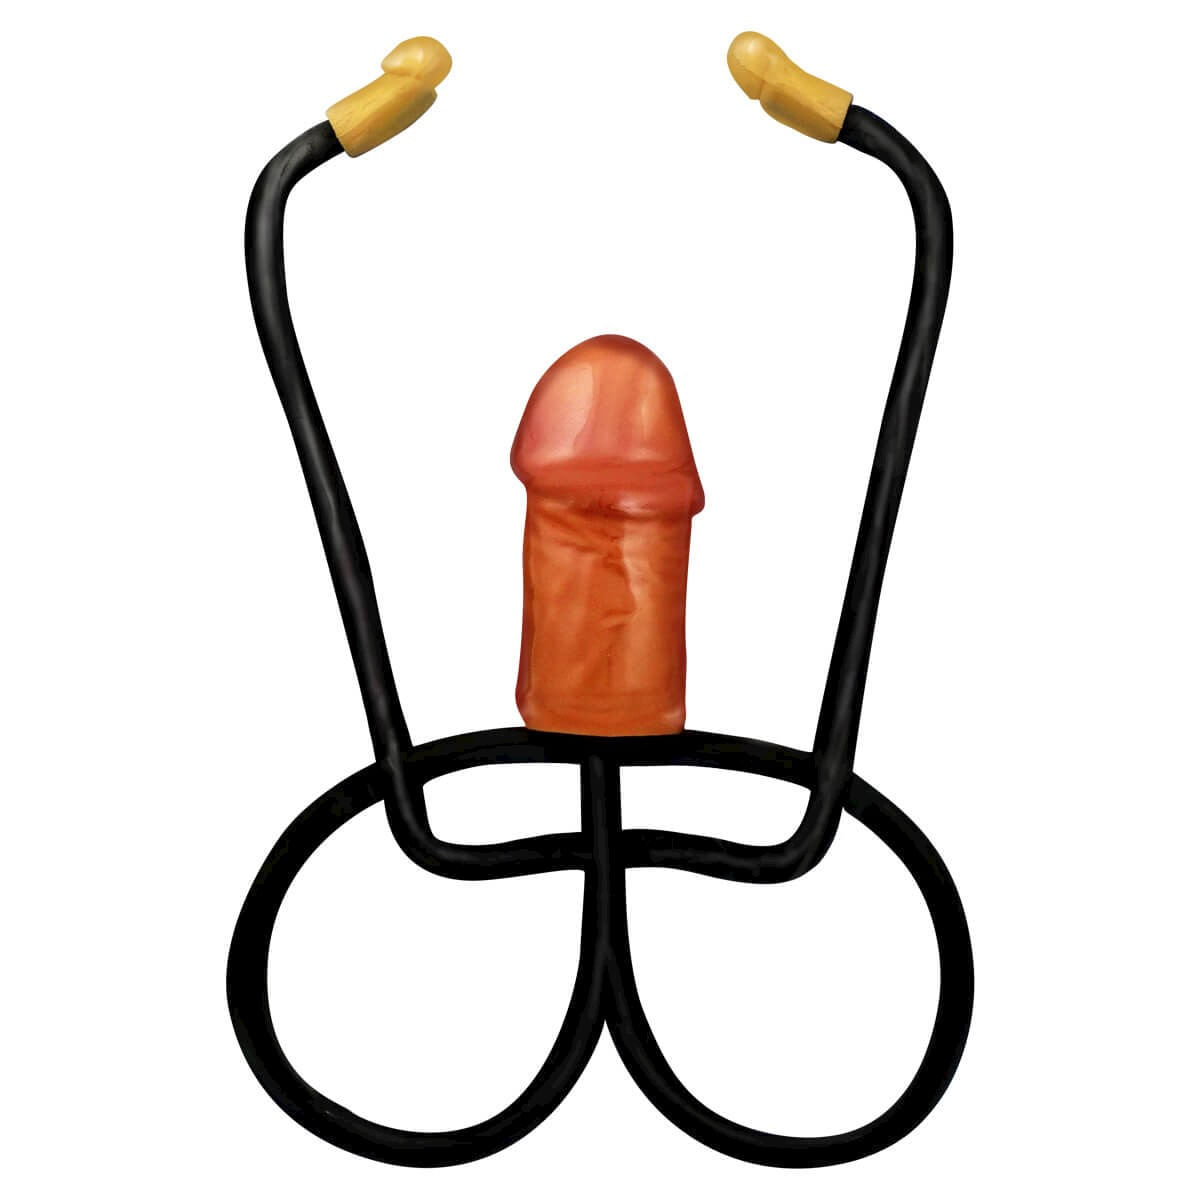 Dr. Loves Pecker Stethoscope Estetoscópio Erótico em Formato de Pênis Miss Collection